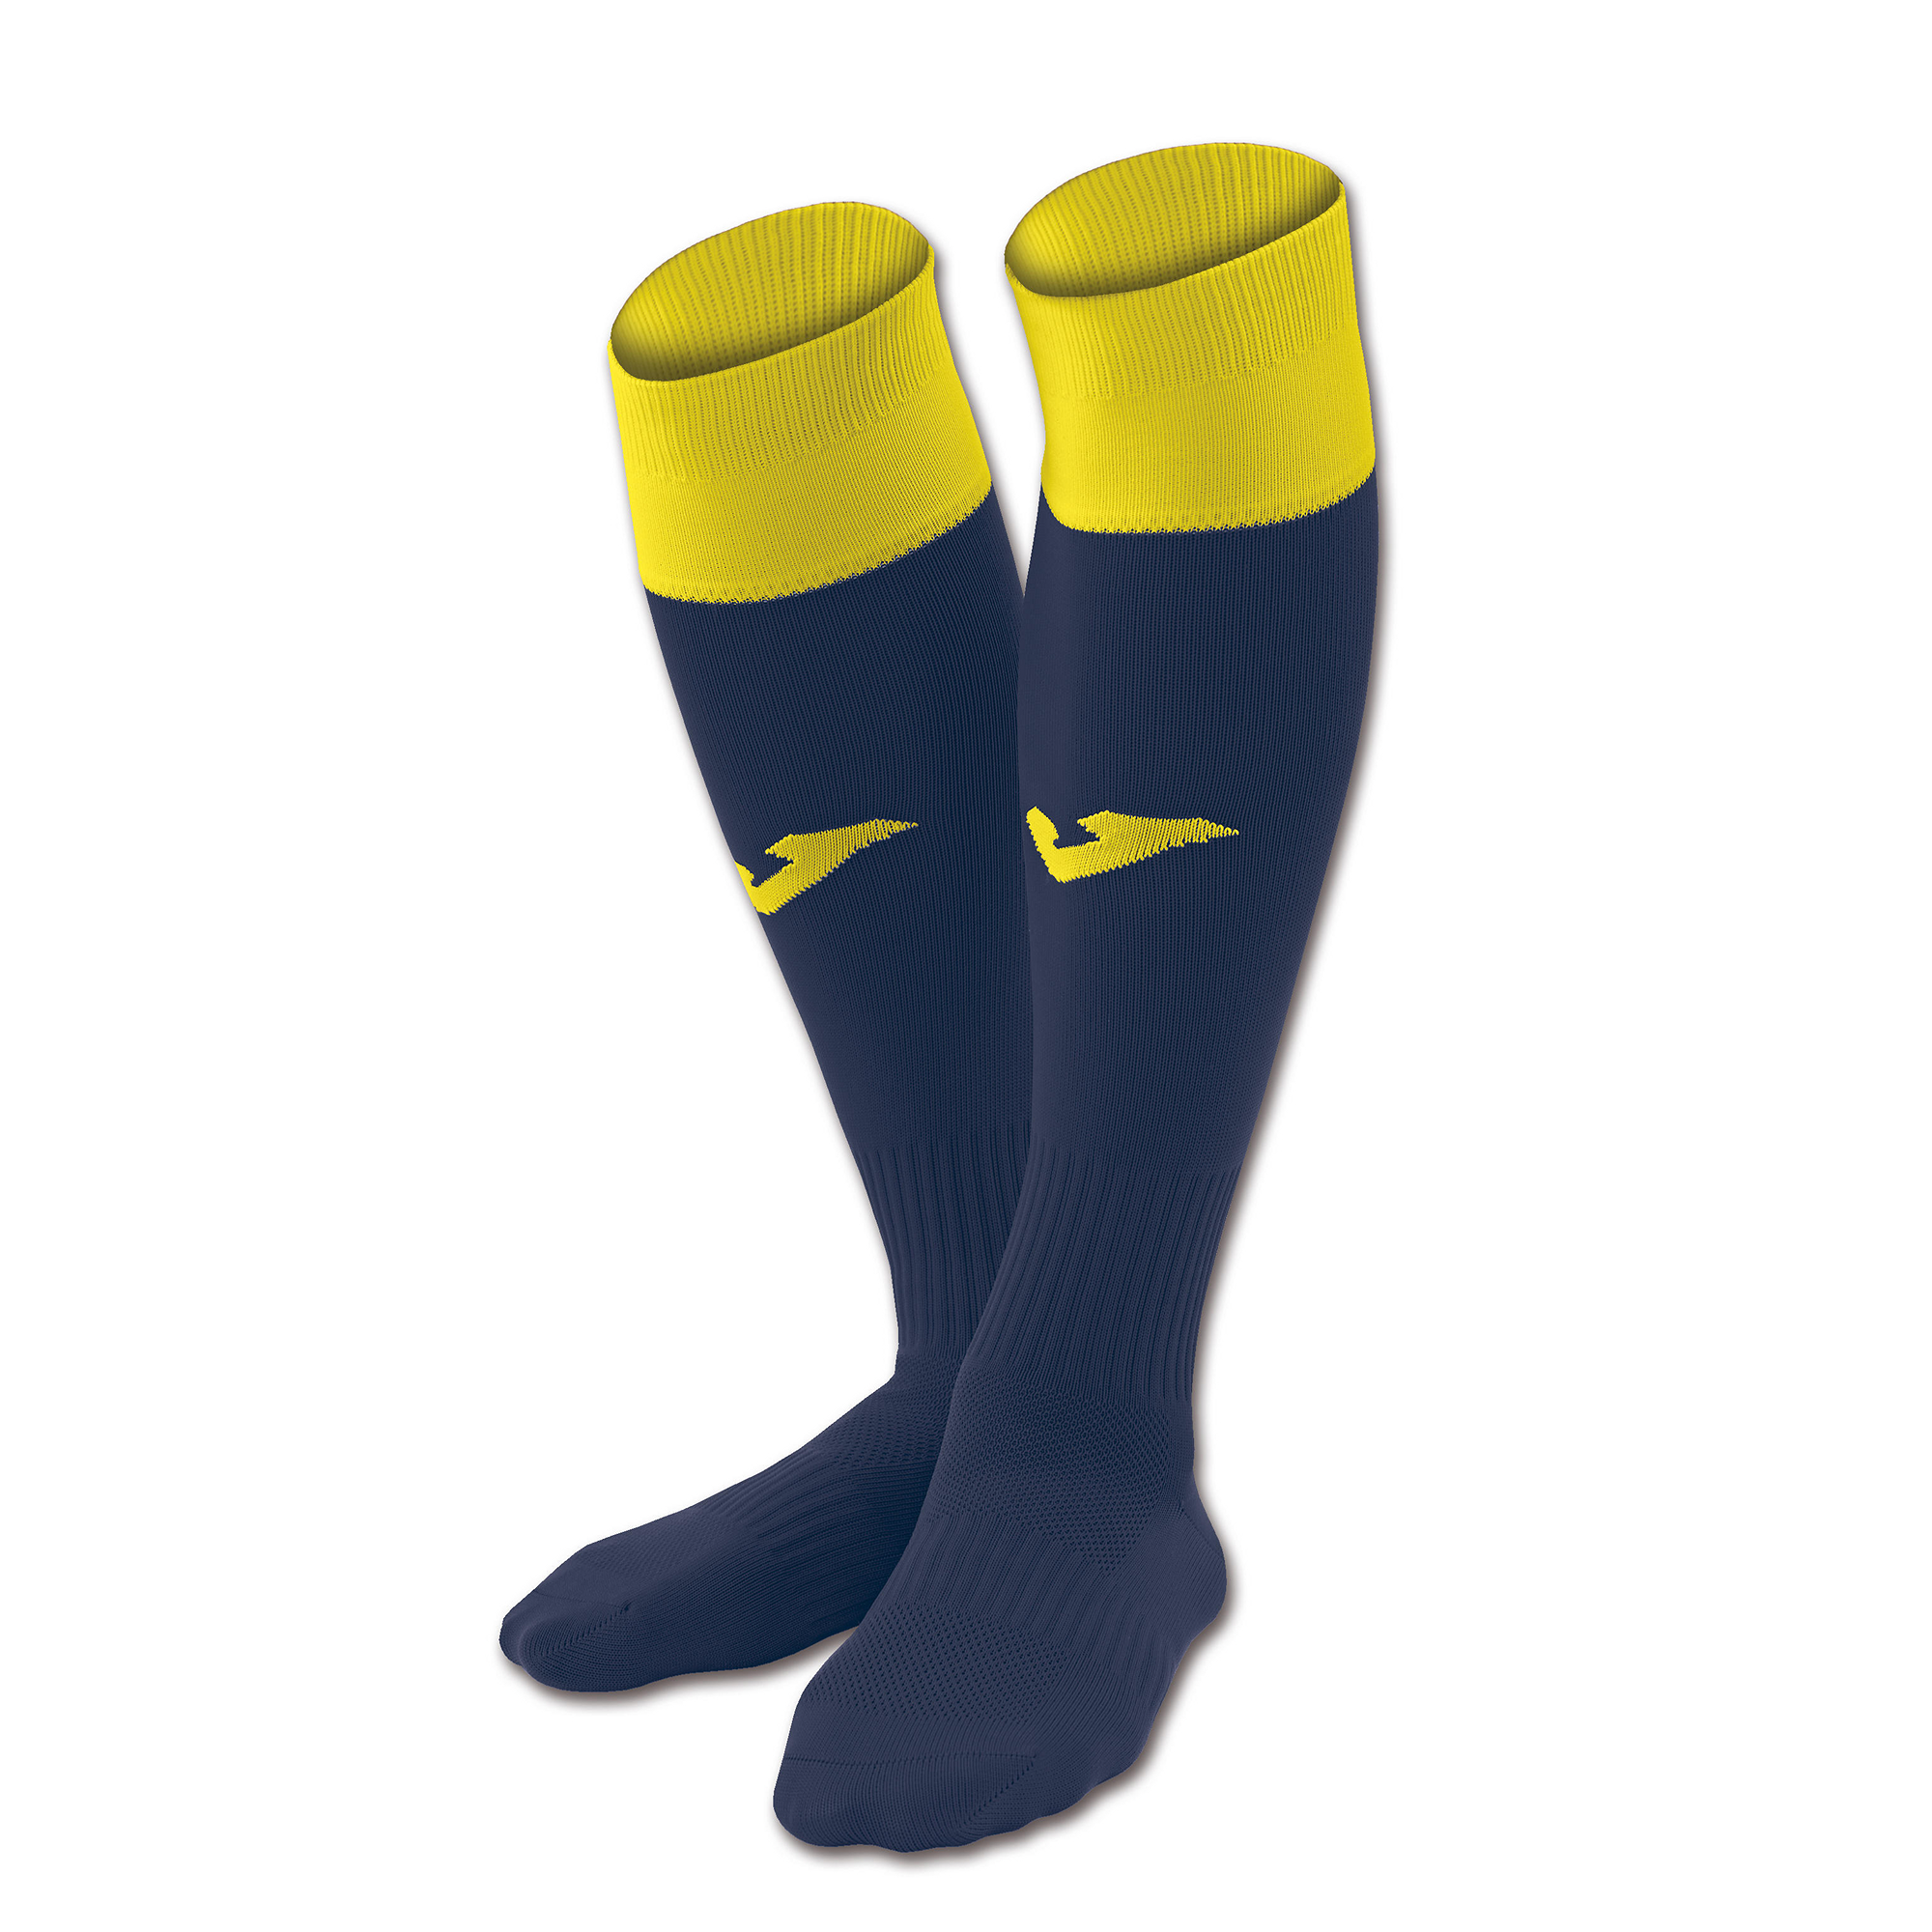 Joma Calcio Sock S (12-1.5) Nvy-yel